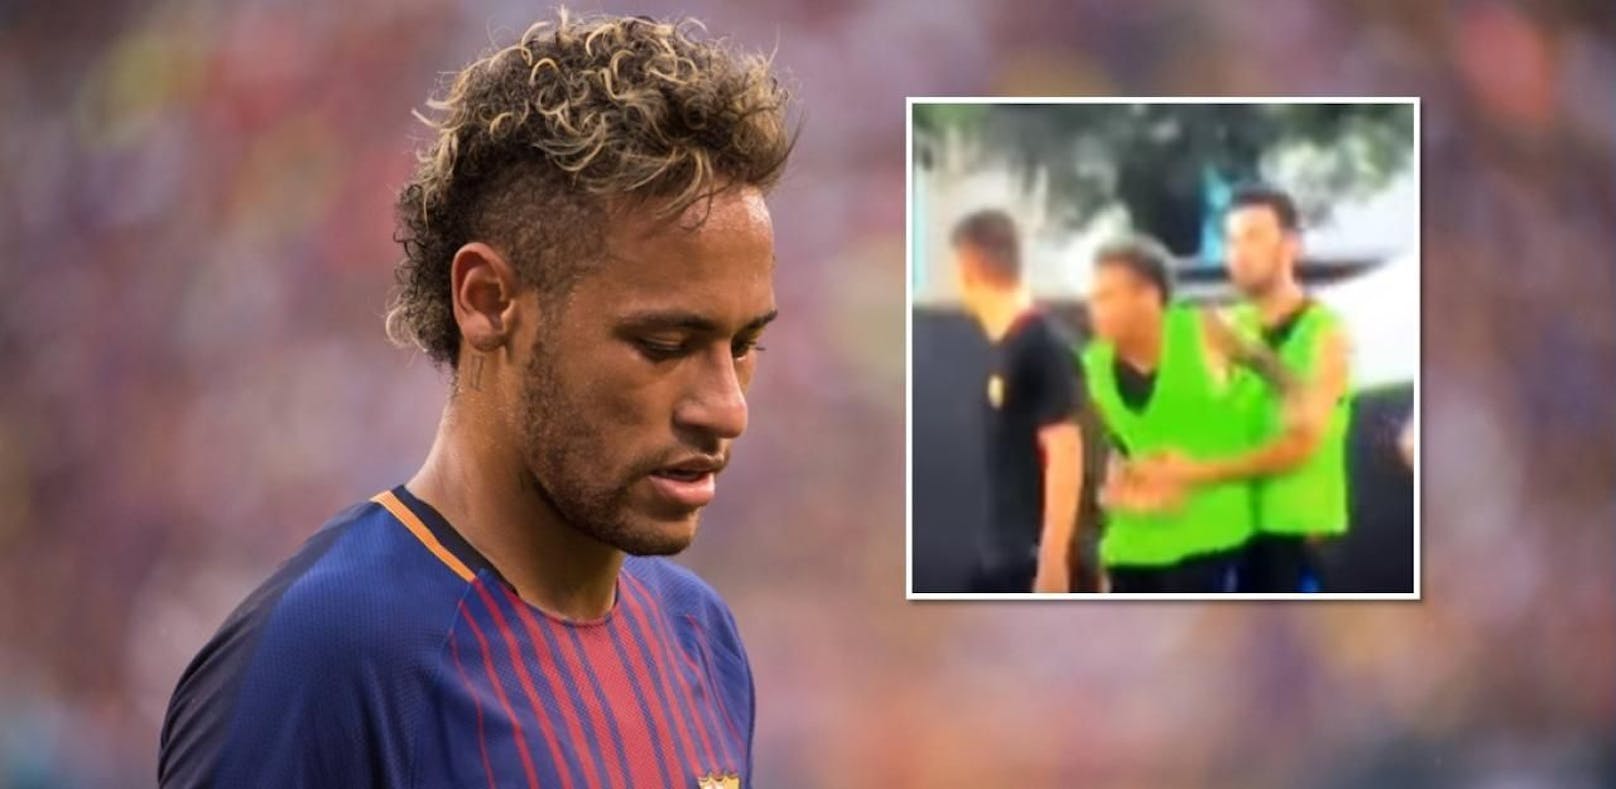 Trainings-Eklat! Neymar zuckt nach Zweikampf aus